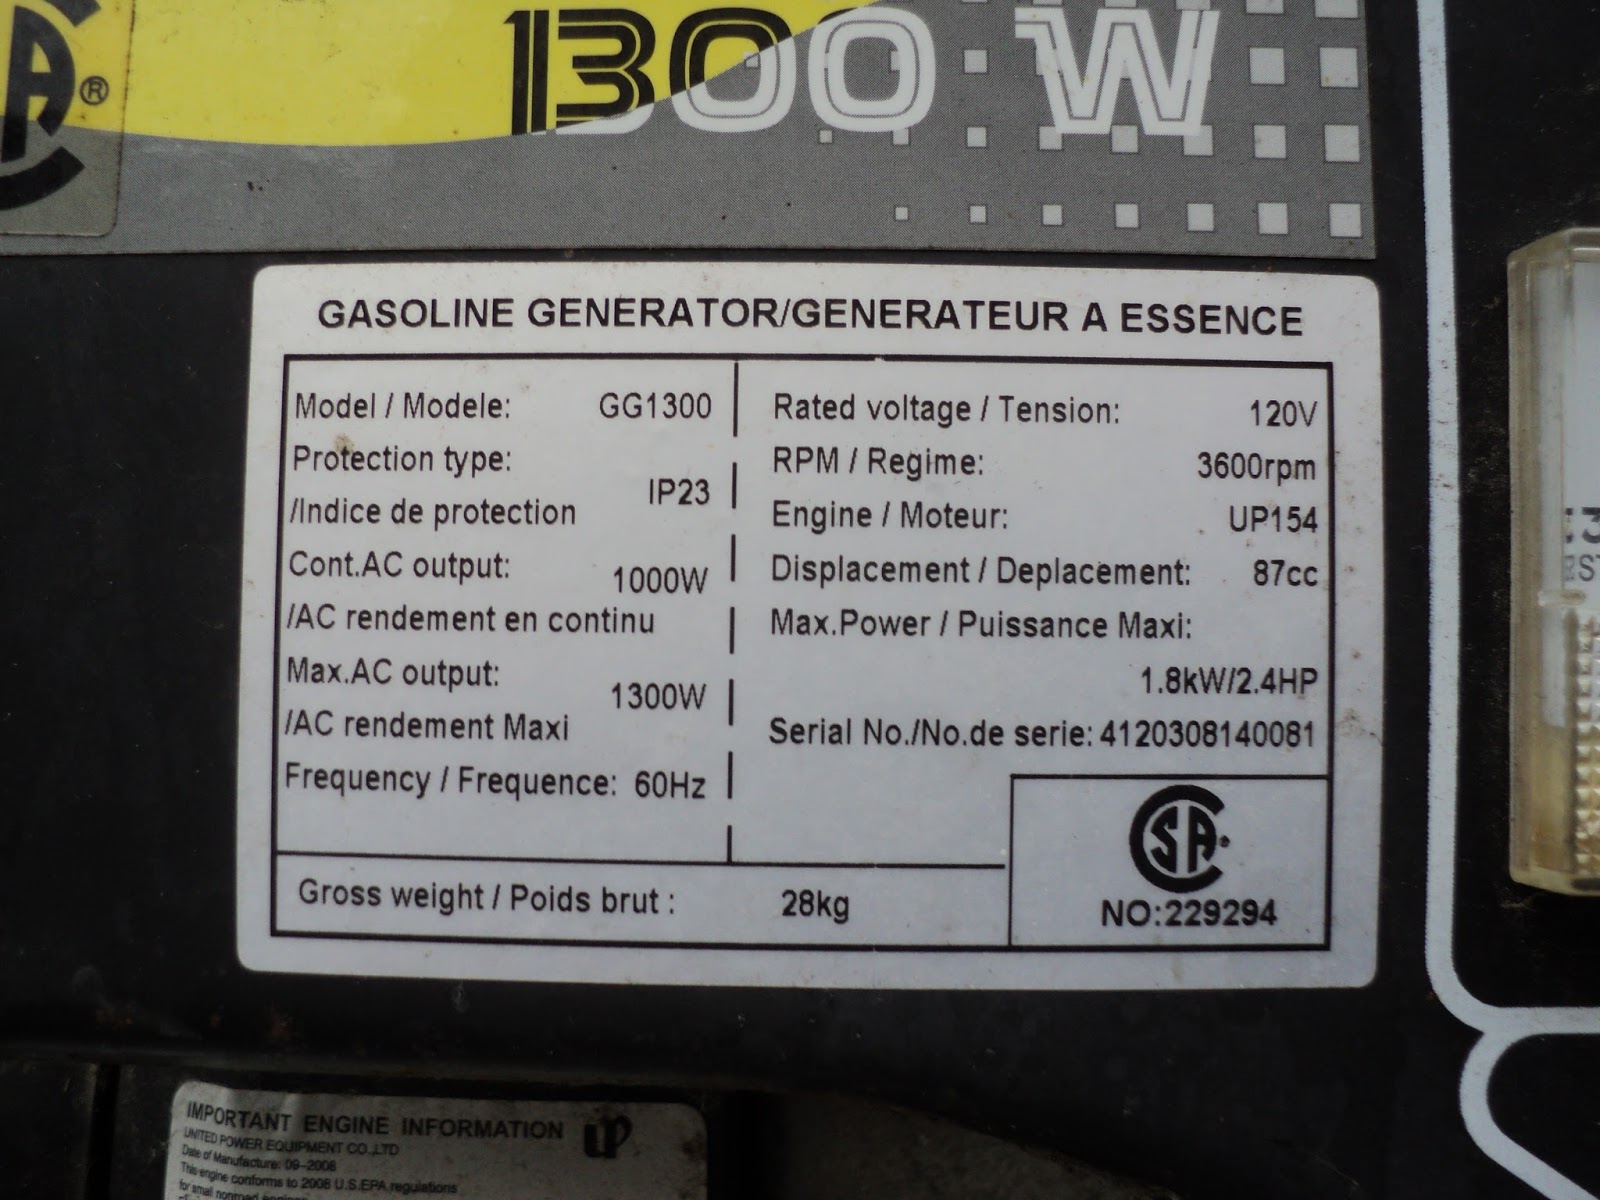 United Power GG1300 1300W Generator - 23HE